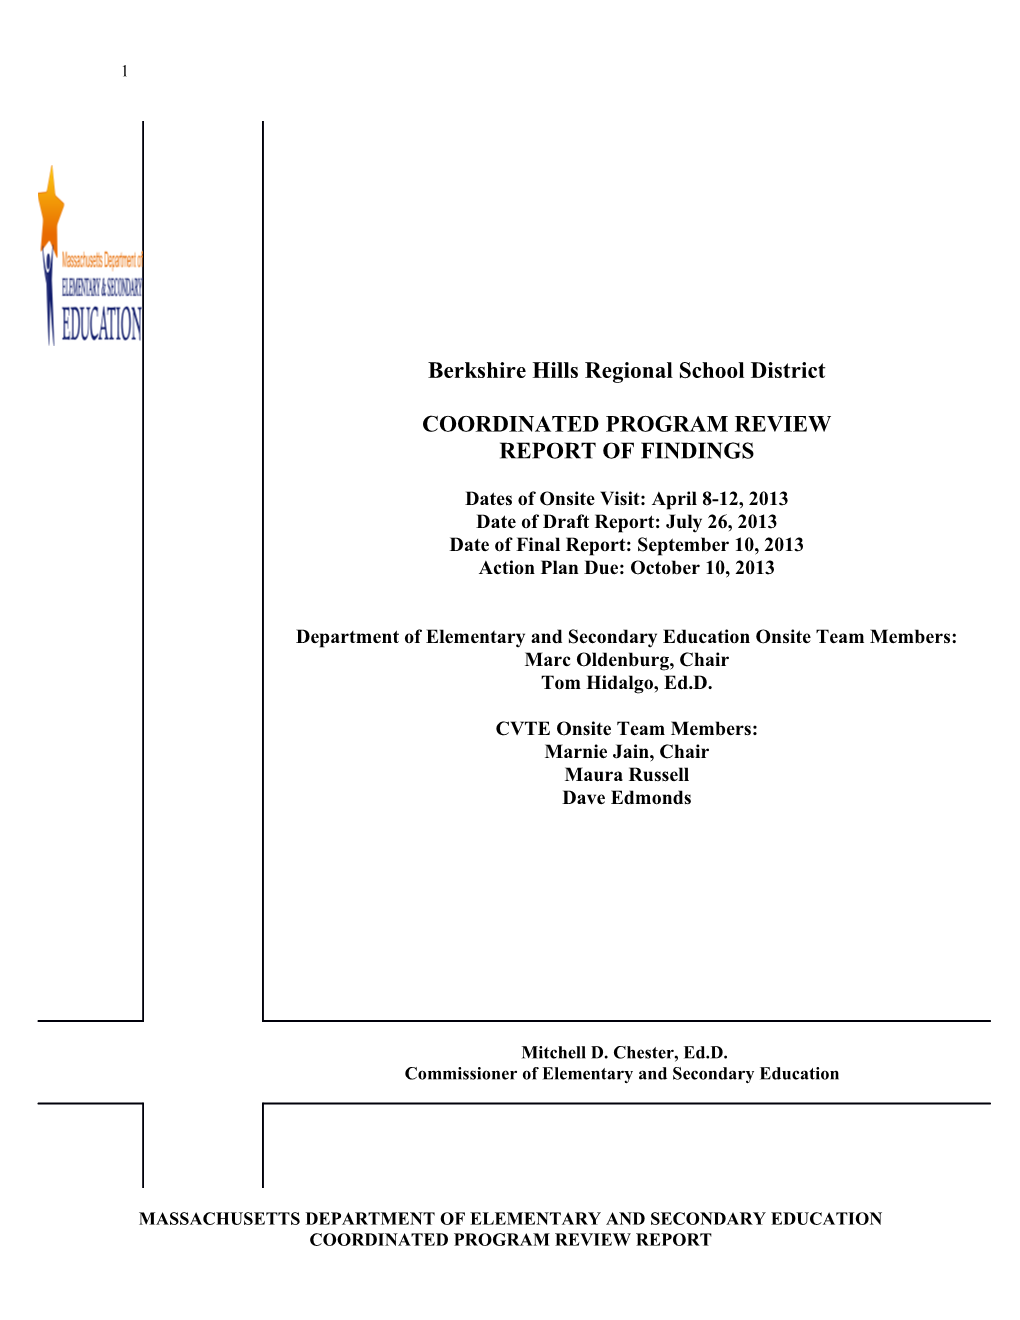 Berkshire Hills RSD CPR Final Report 2013